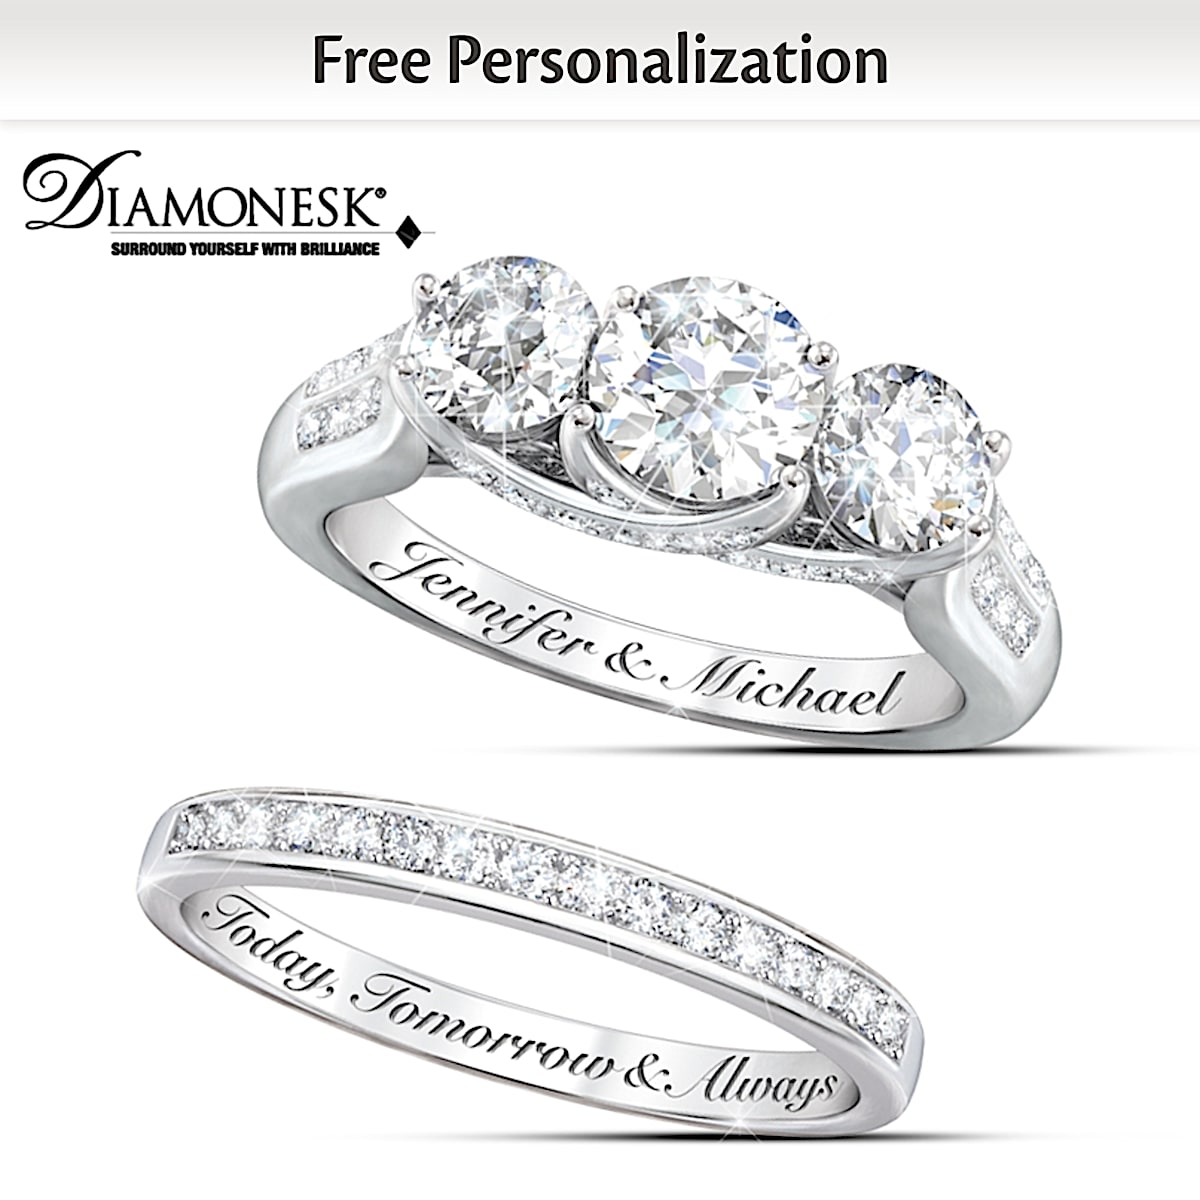 Diamonesk Personalized Engraved Engagement Ring And Wedding Band Set